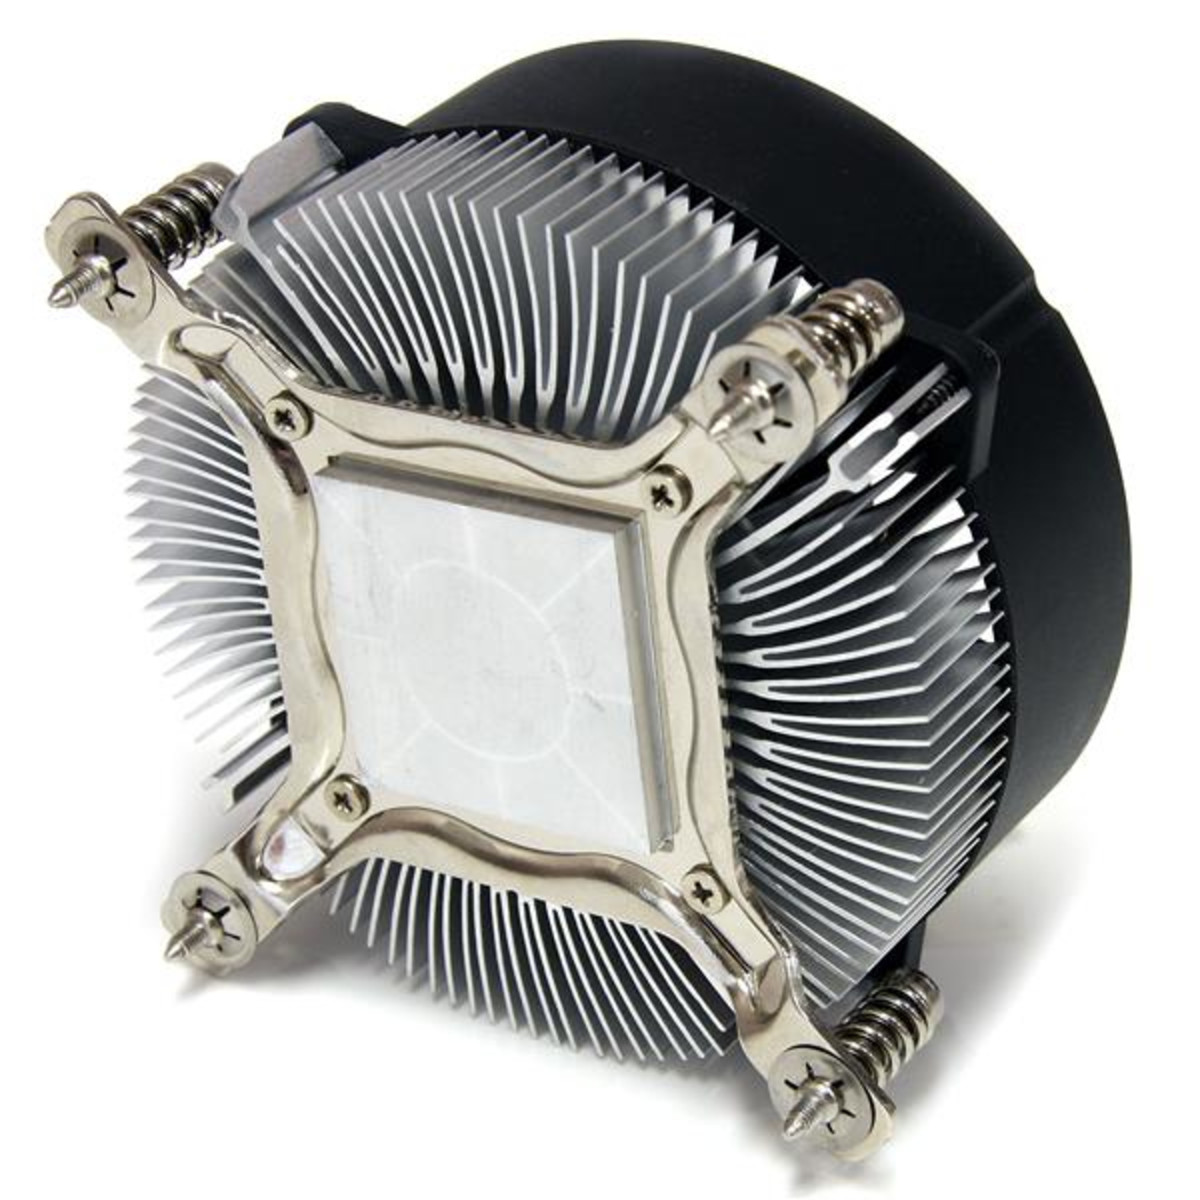 95mm CPU Cooler Fan with Heatsink